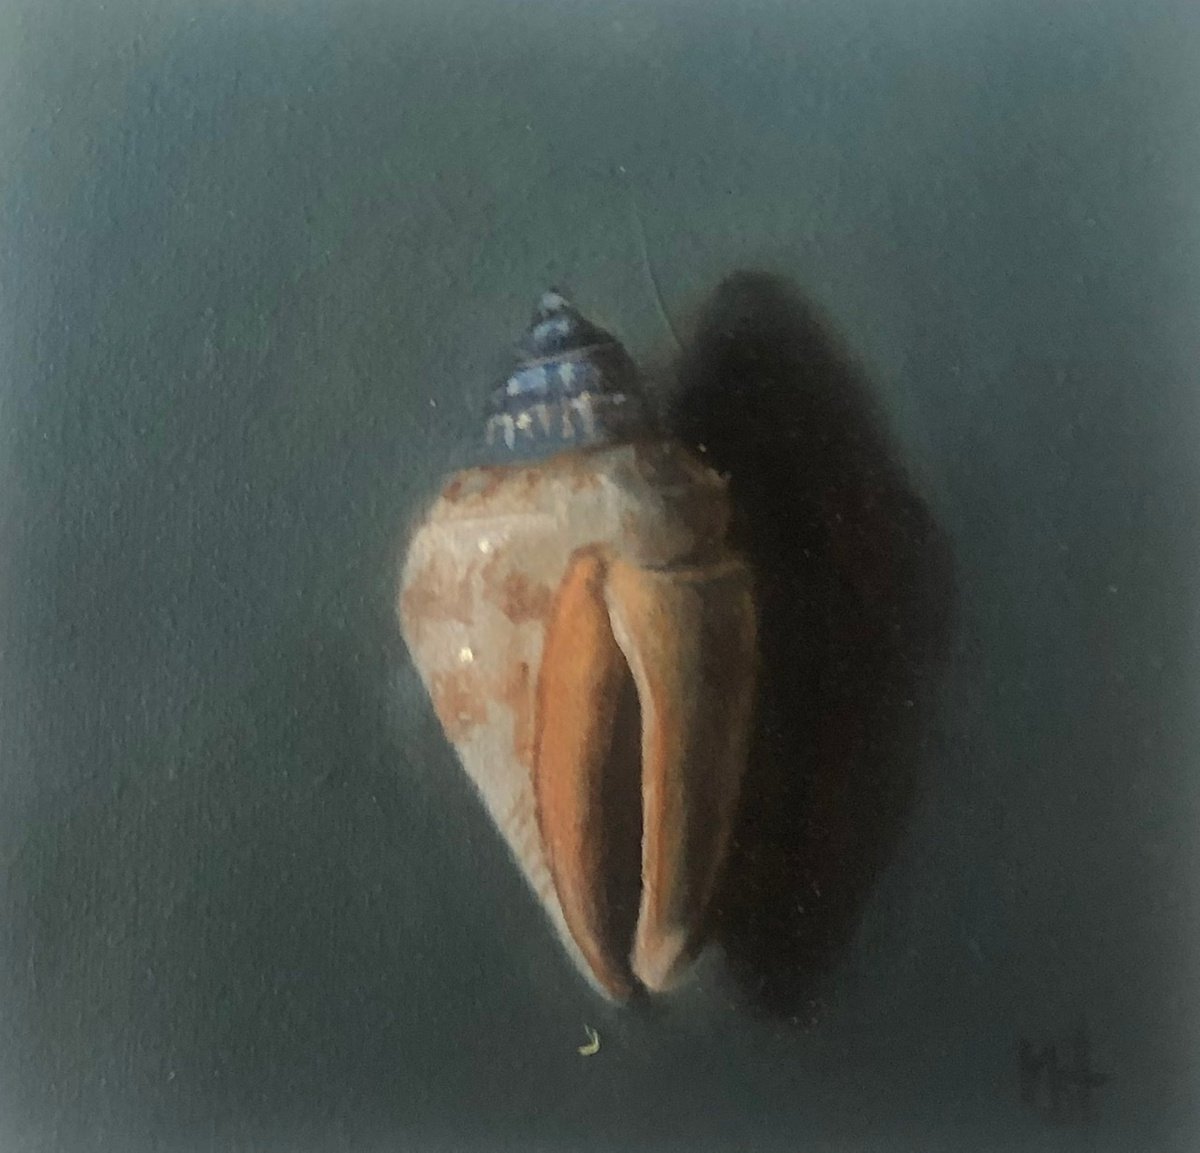 Shell by Marybeth Hucker